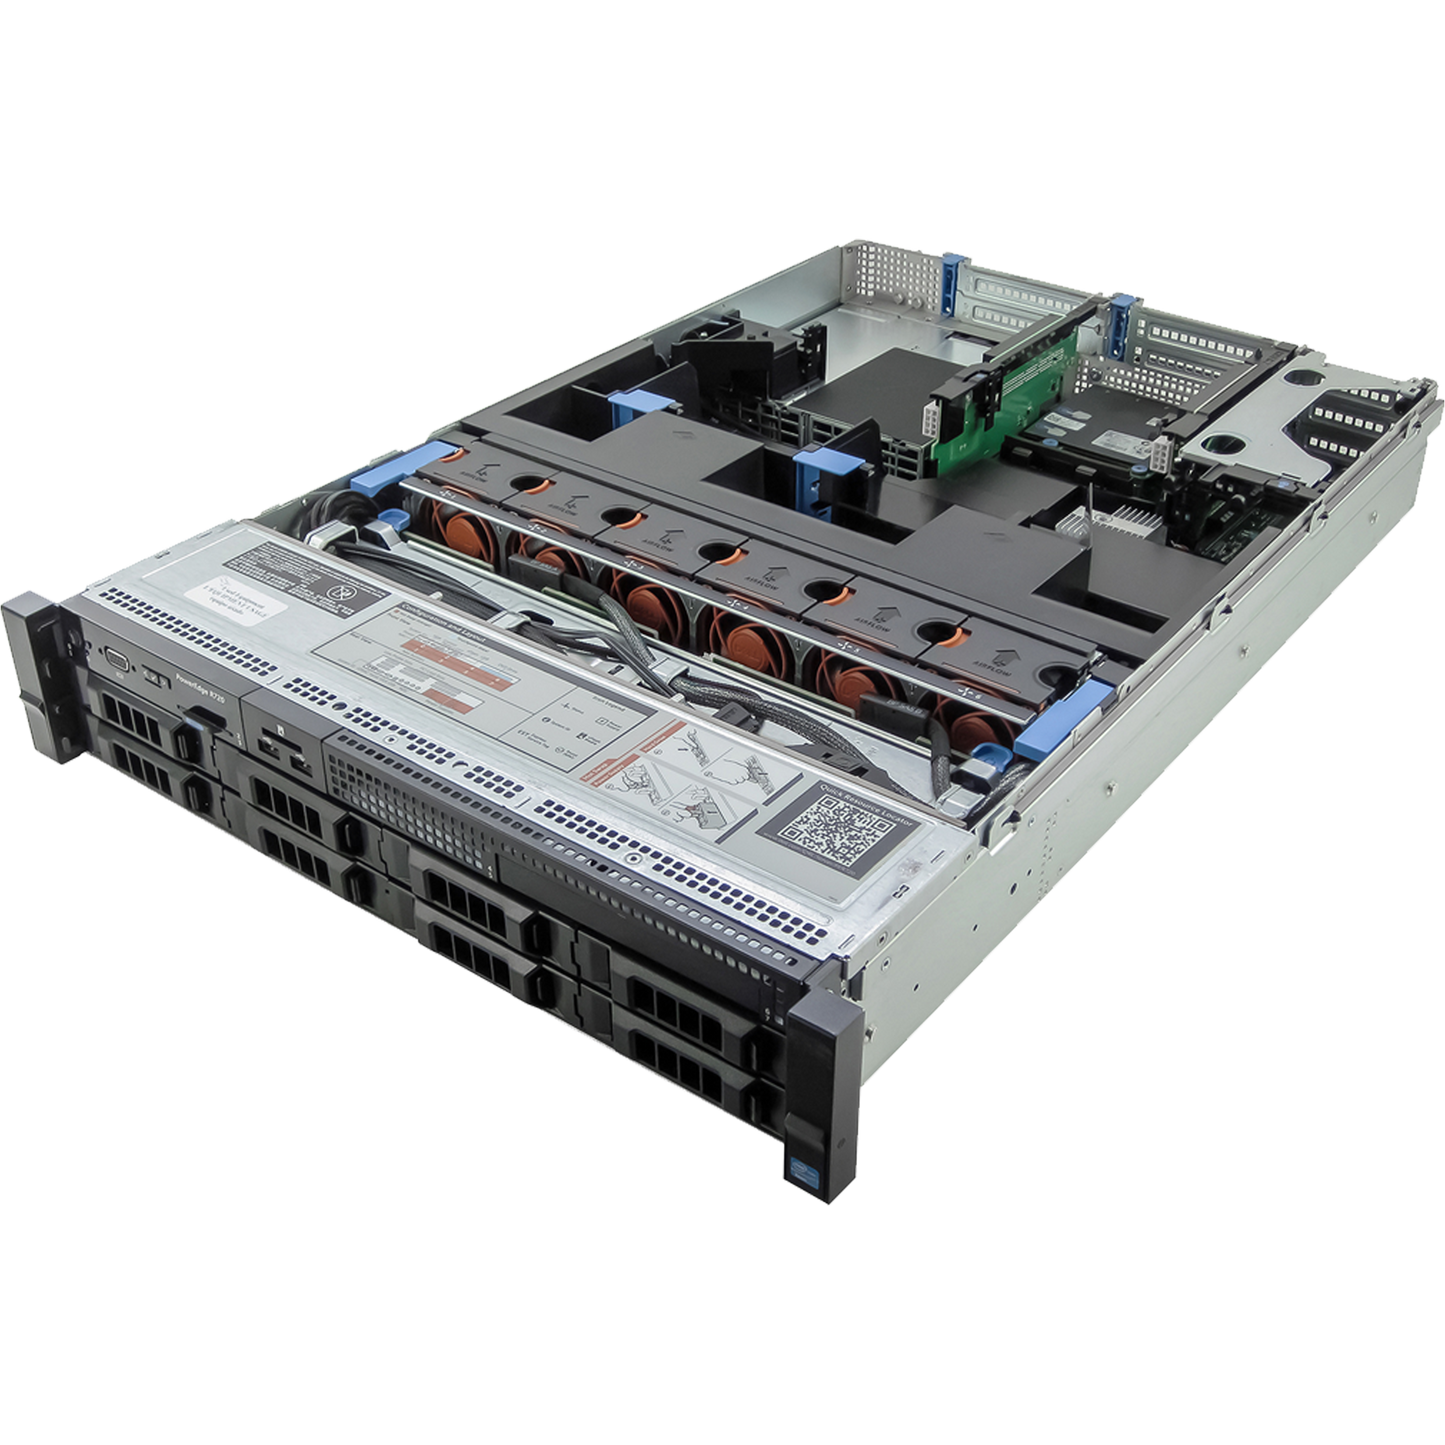 Dell PowerEdge R720 Xeon 2 x 10 Core CPU Server - 3.5" Backplane Servers